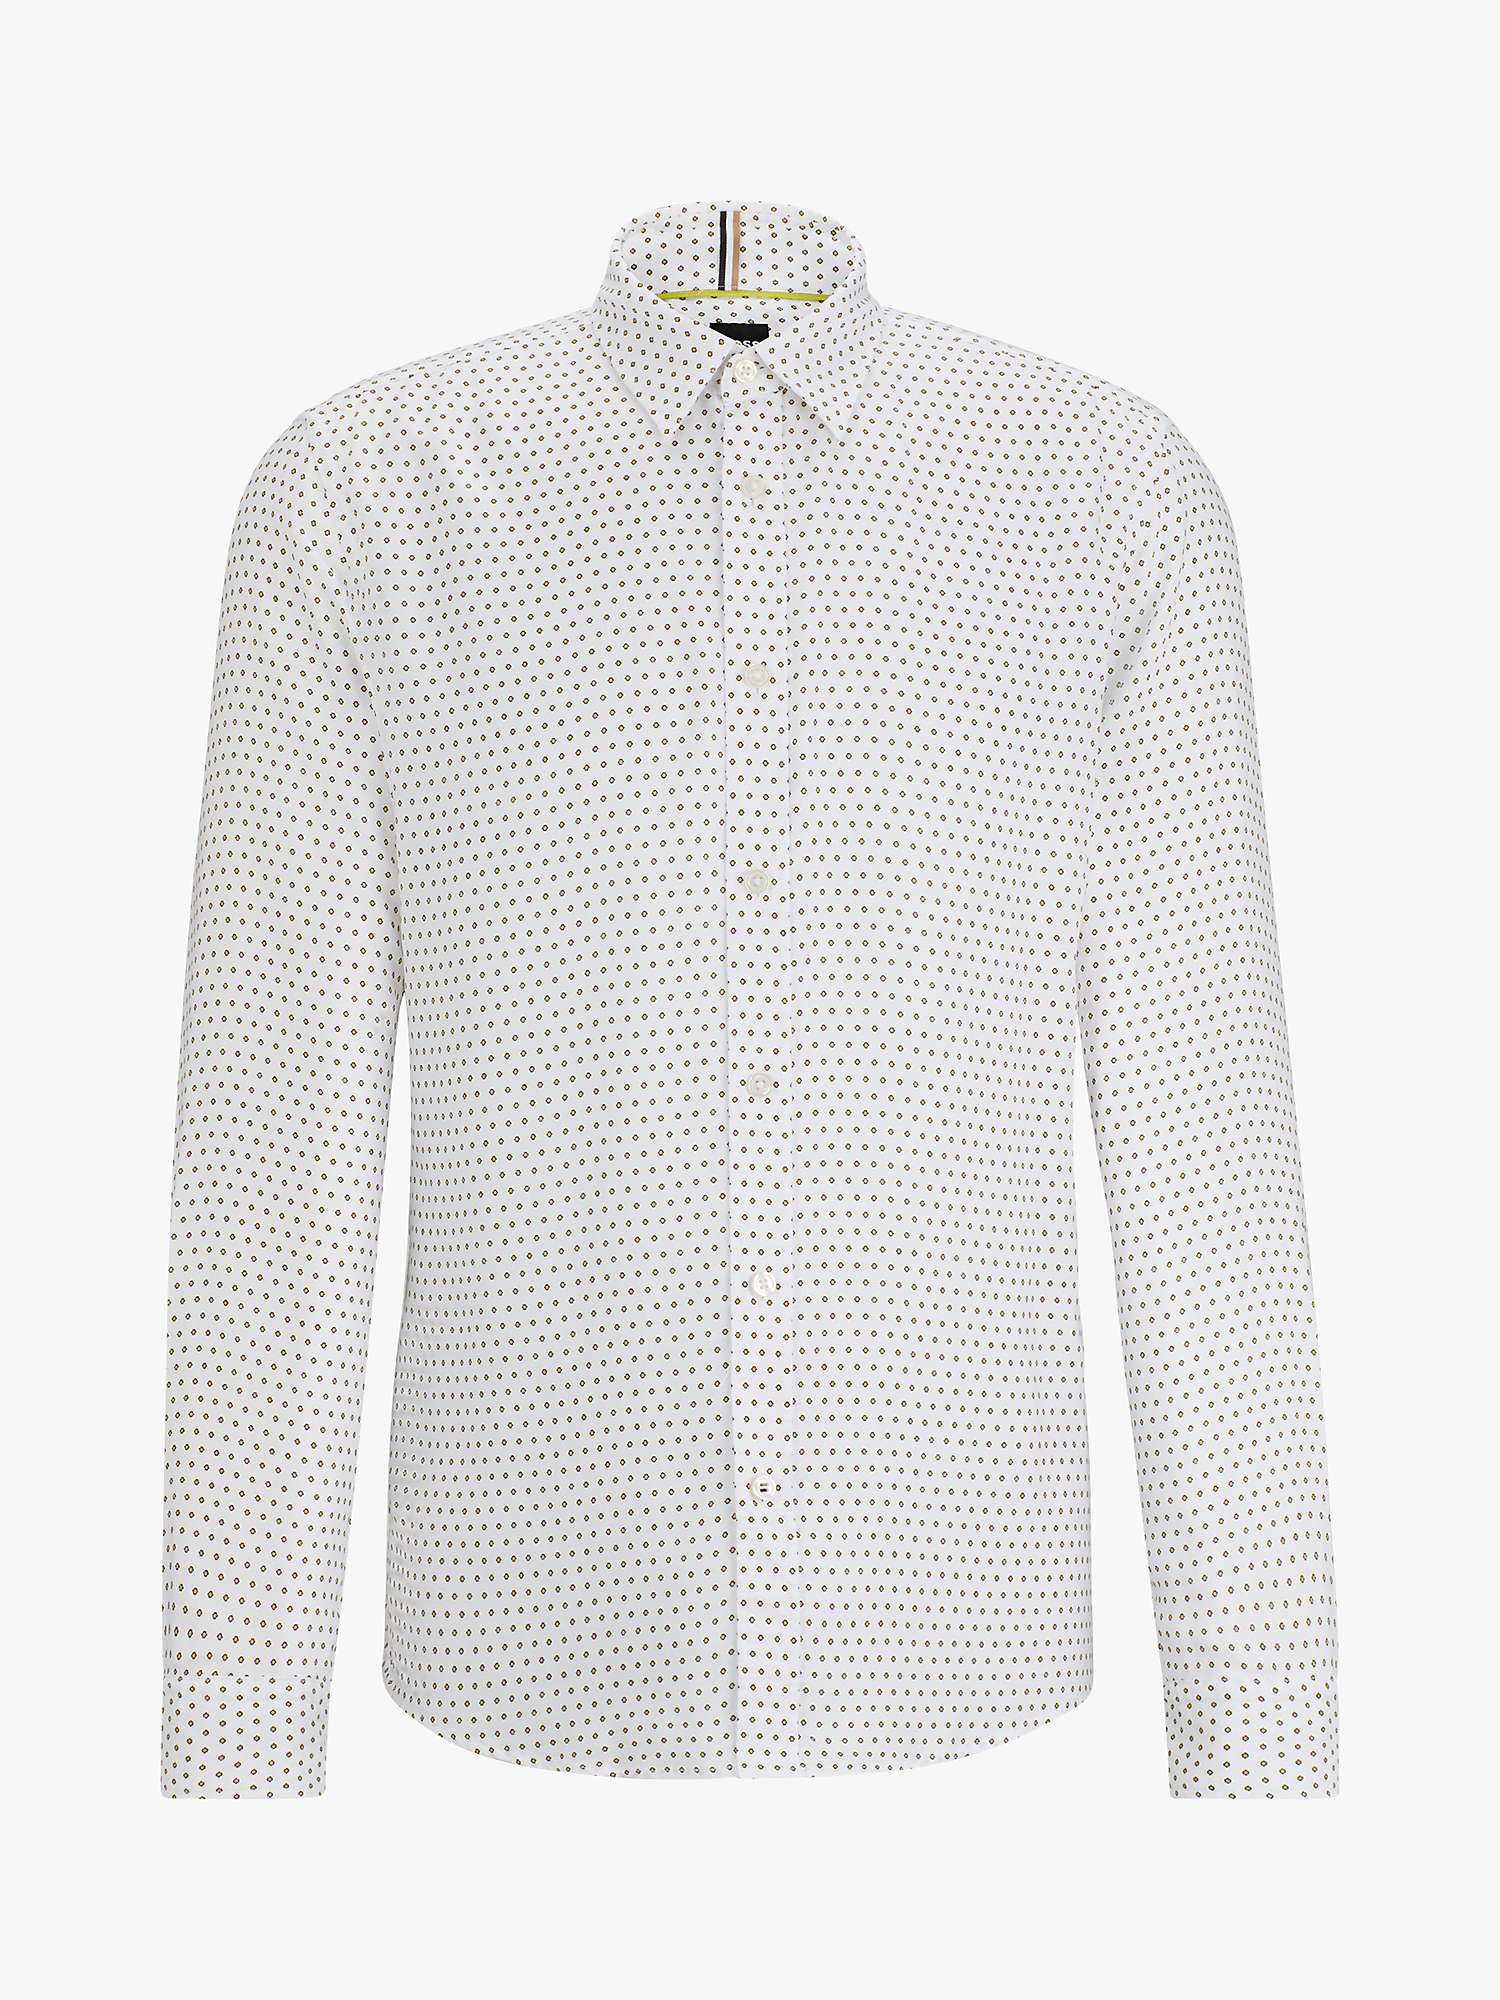 Buy HUGO BOSS BOSS Roan Geometric Print Slim Fit Shirt, White/Green Online at johnlewis.com